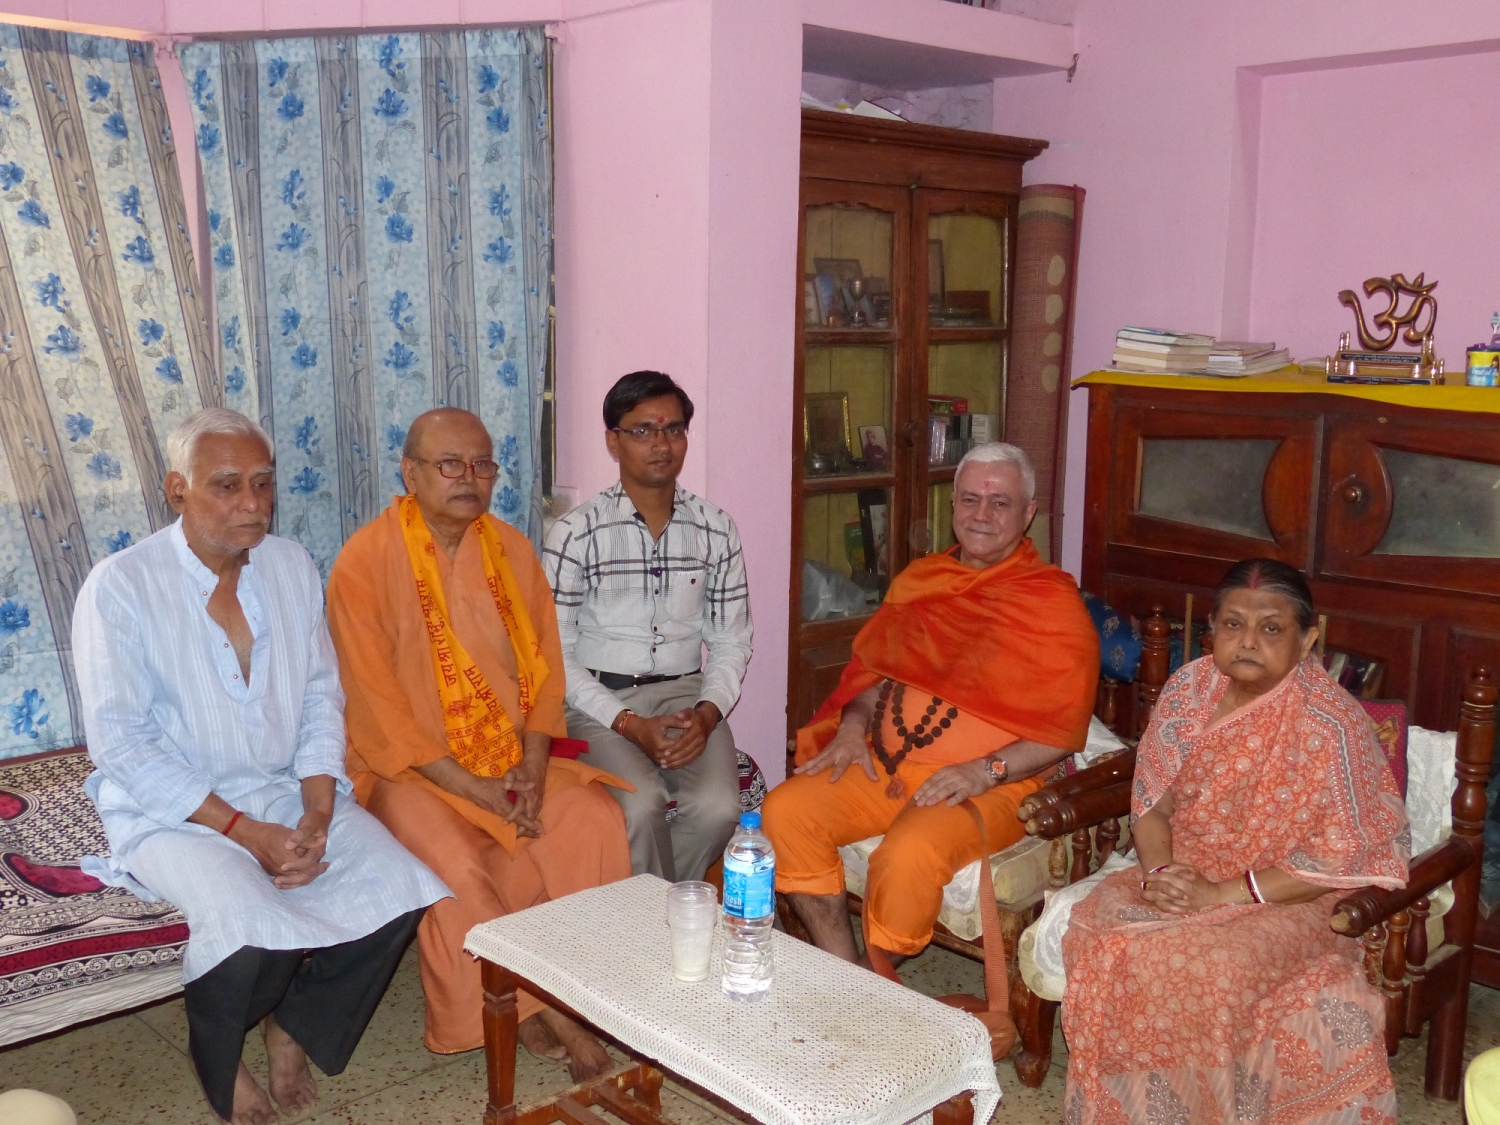 Rencontre de H.H. Jagat Guru Amrta Sūryānanda Mahā Rāja avec Svāmin Malgalteertam - Dehogar, Inde - 2016, mai